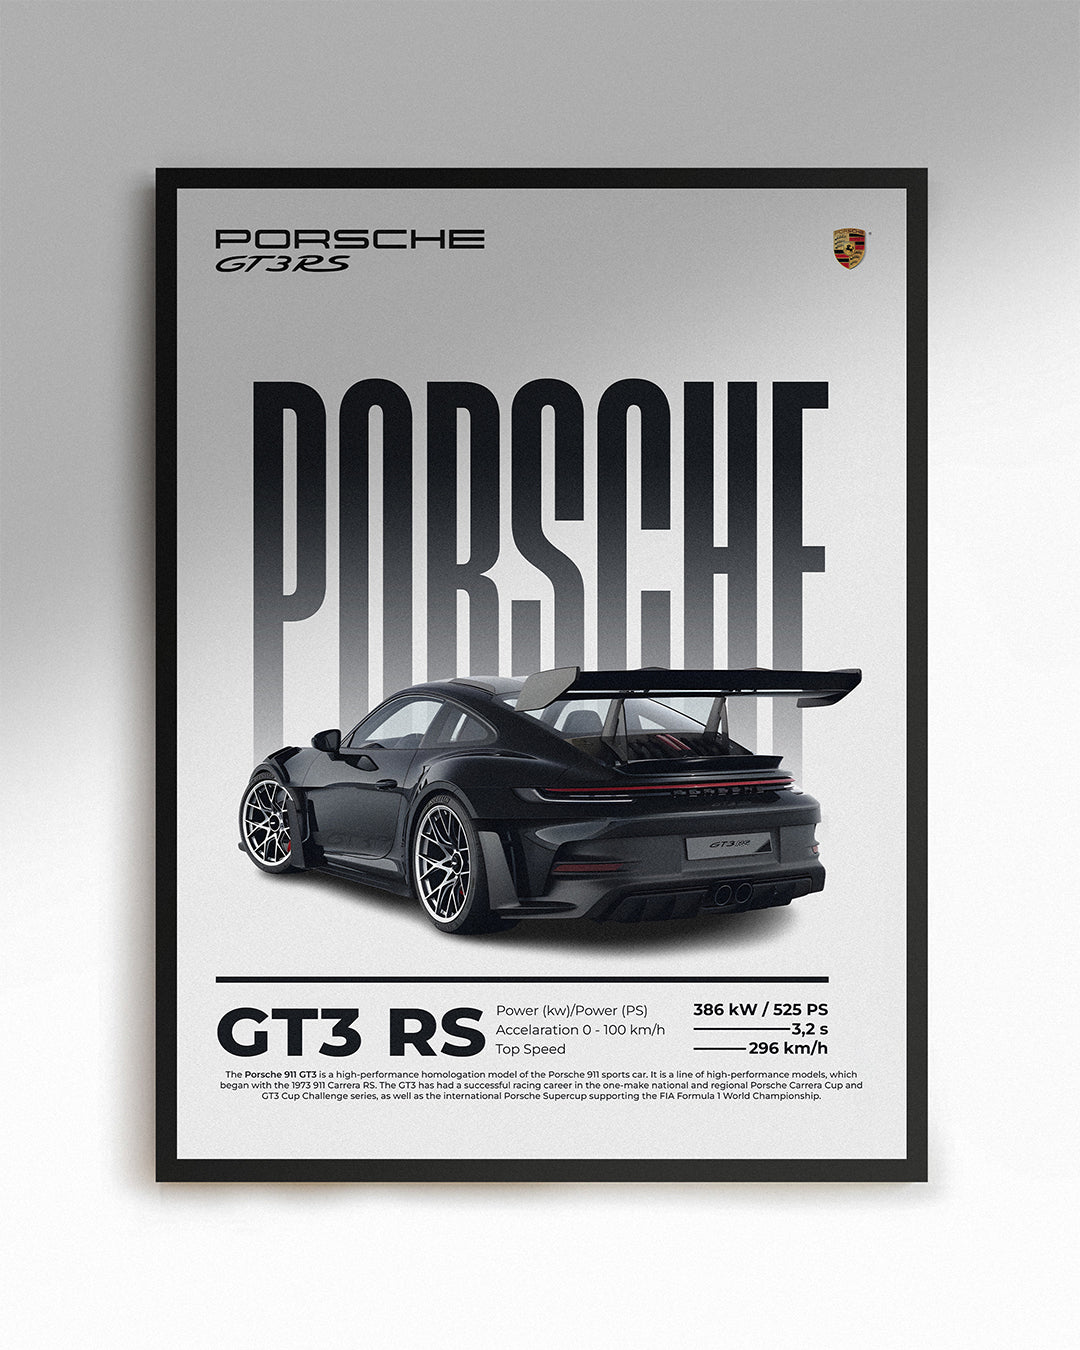 Dossier – Showroom : 911 GT3 RS